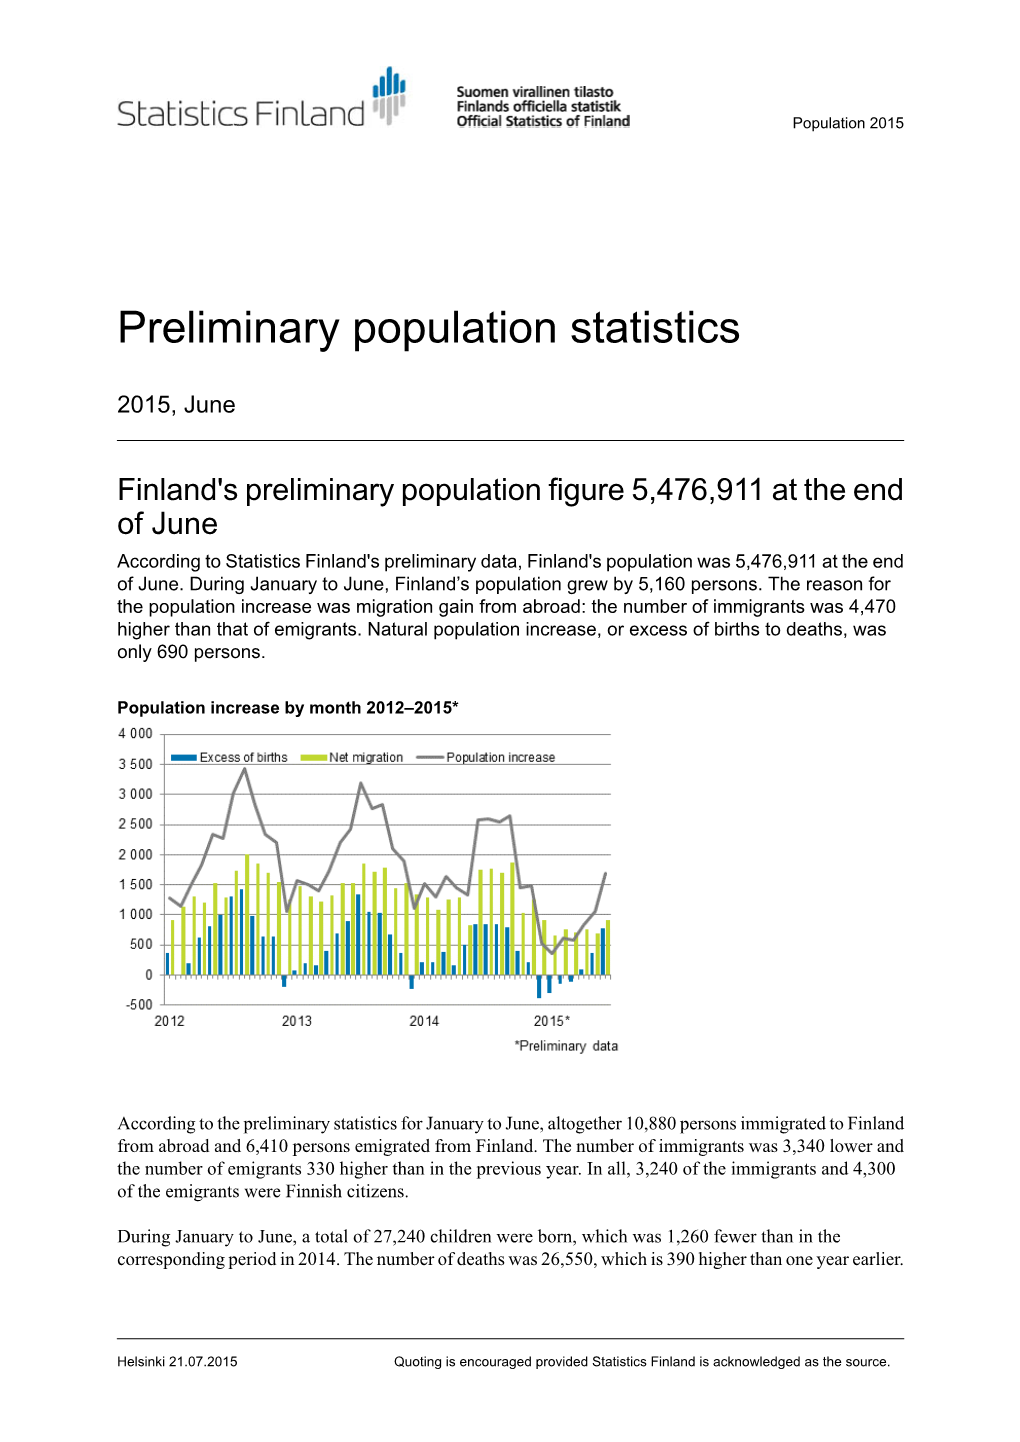 Preliminary Population Statistics 2015, June